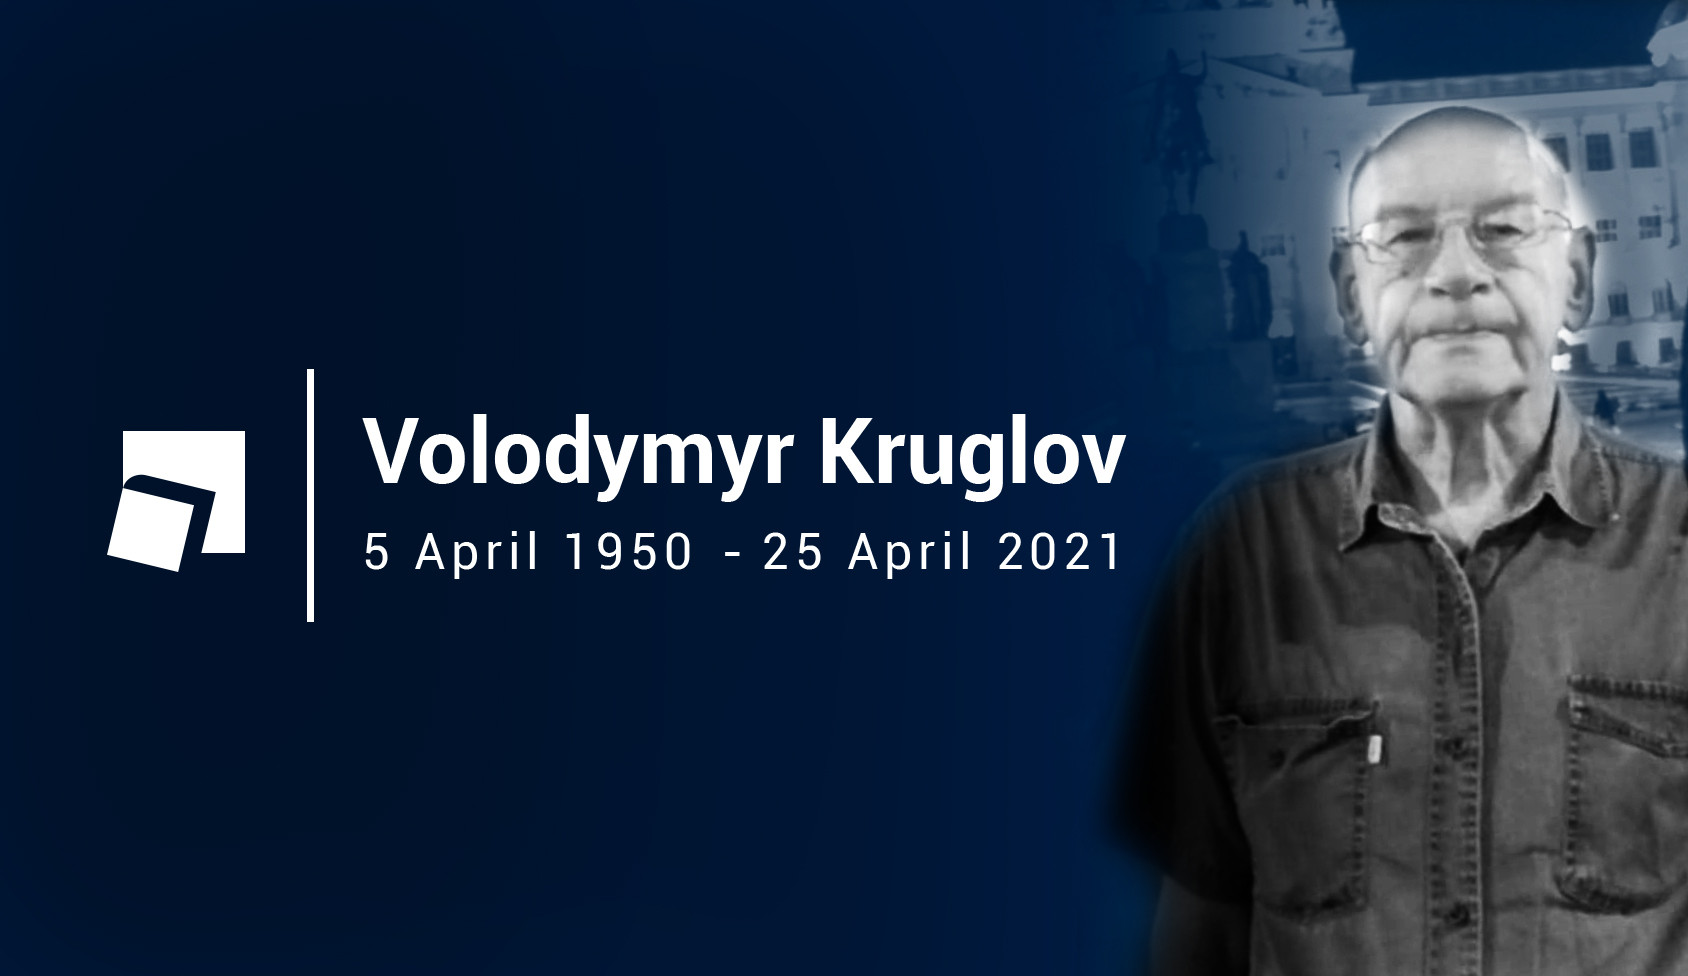 Friend and colleague Dr Volodymyr Kruglov dies on 25 April 2021